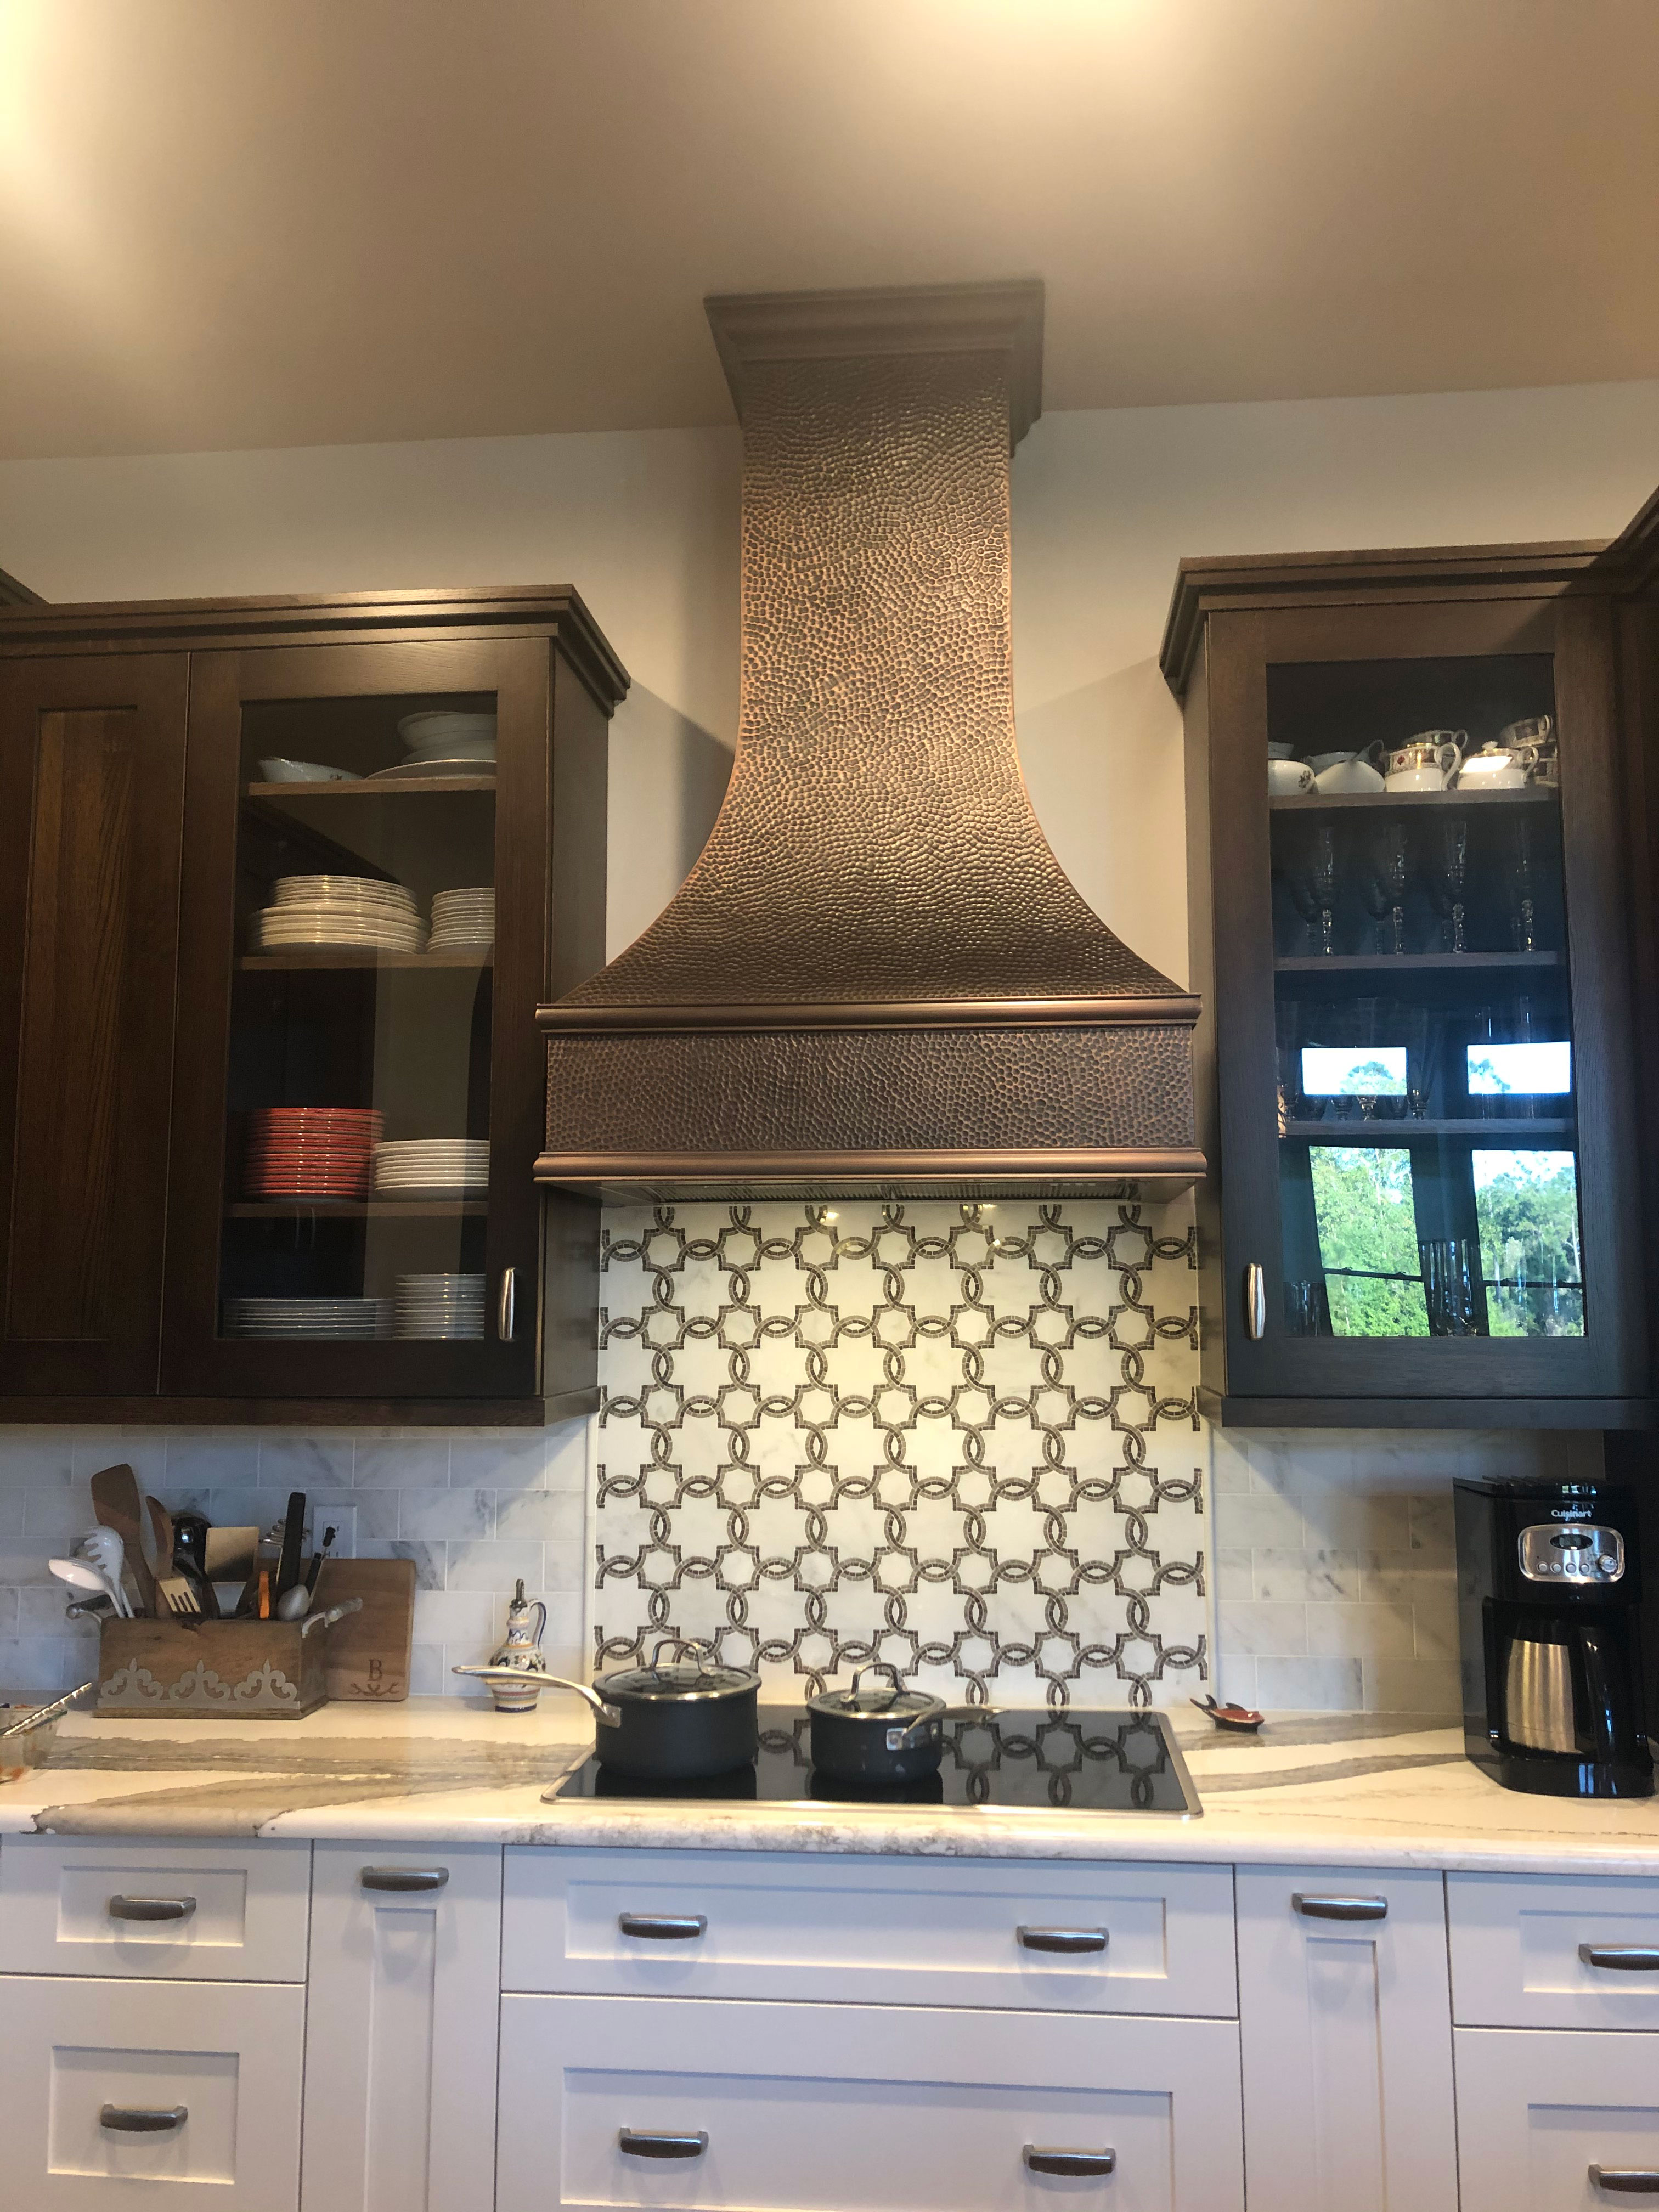 Kitchen with a copper sleek range hood, elegant french design, pristine white cabinets, luxurious marble countertops, charming brick backsplash